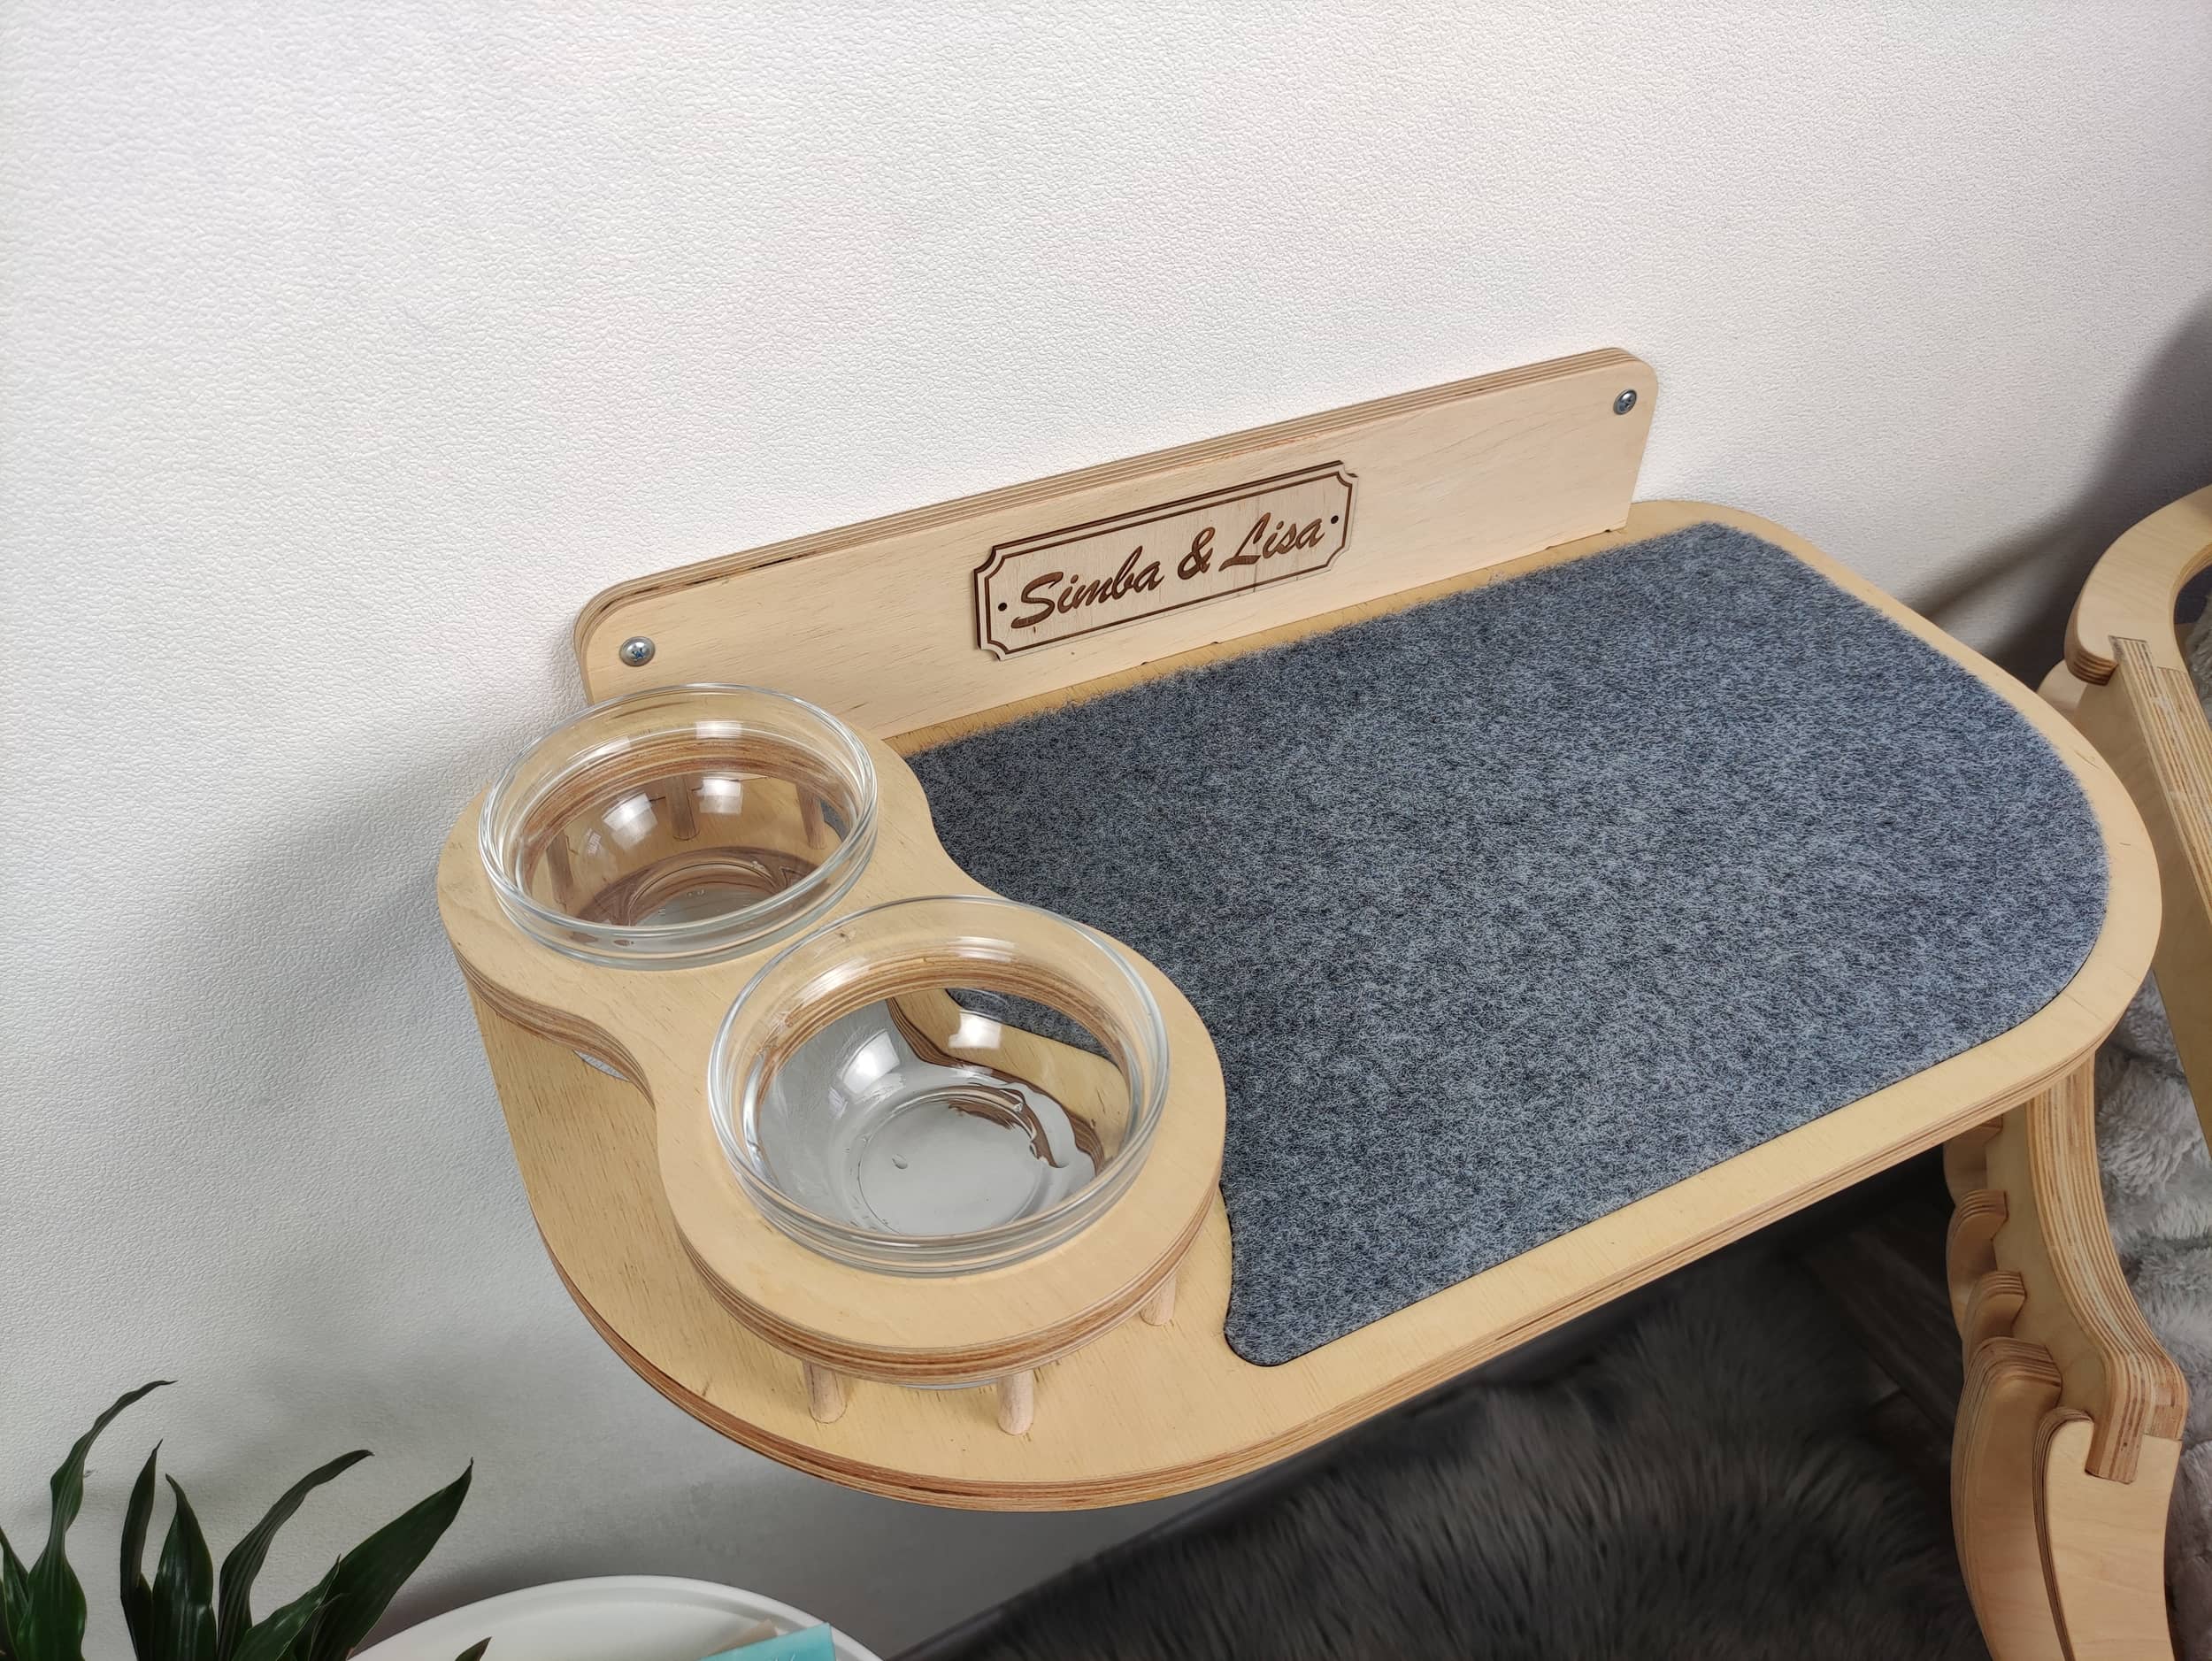 Big cat shelf-feeder - Light & raised bowls